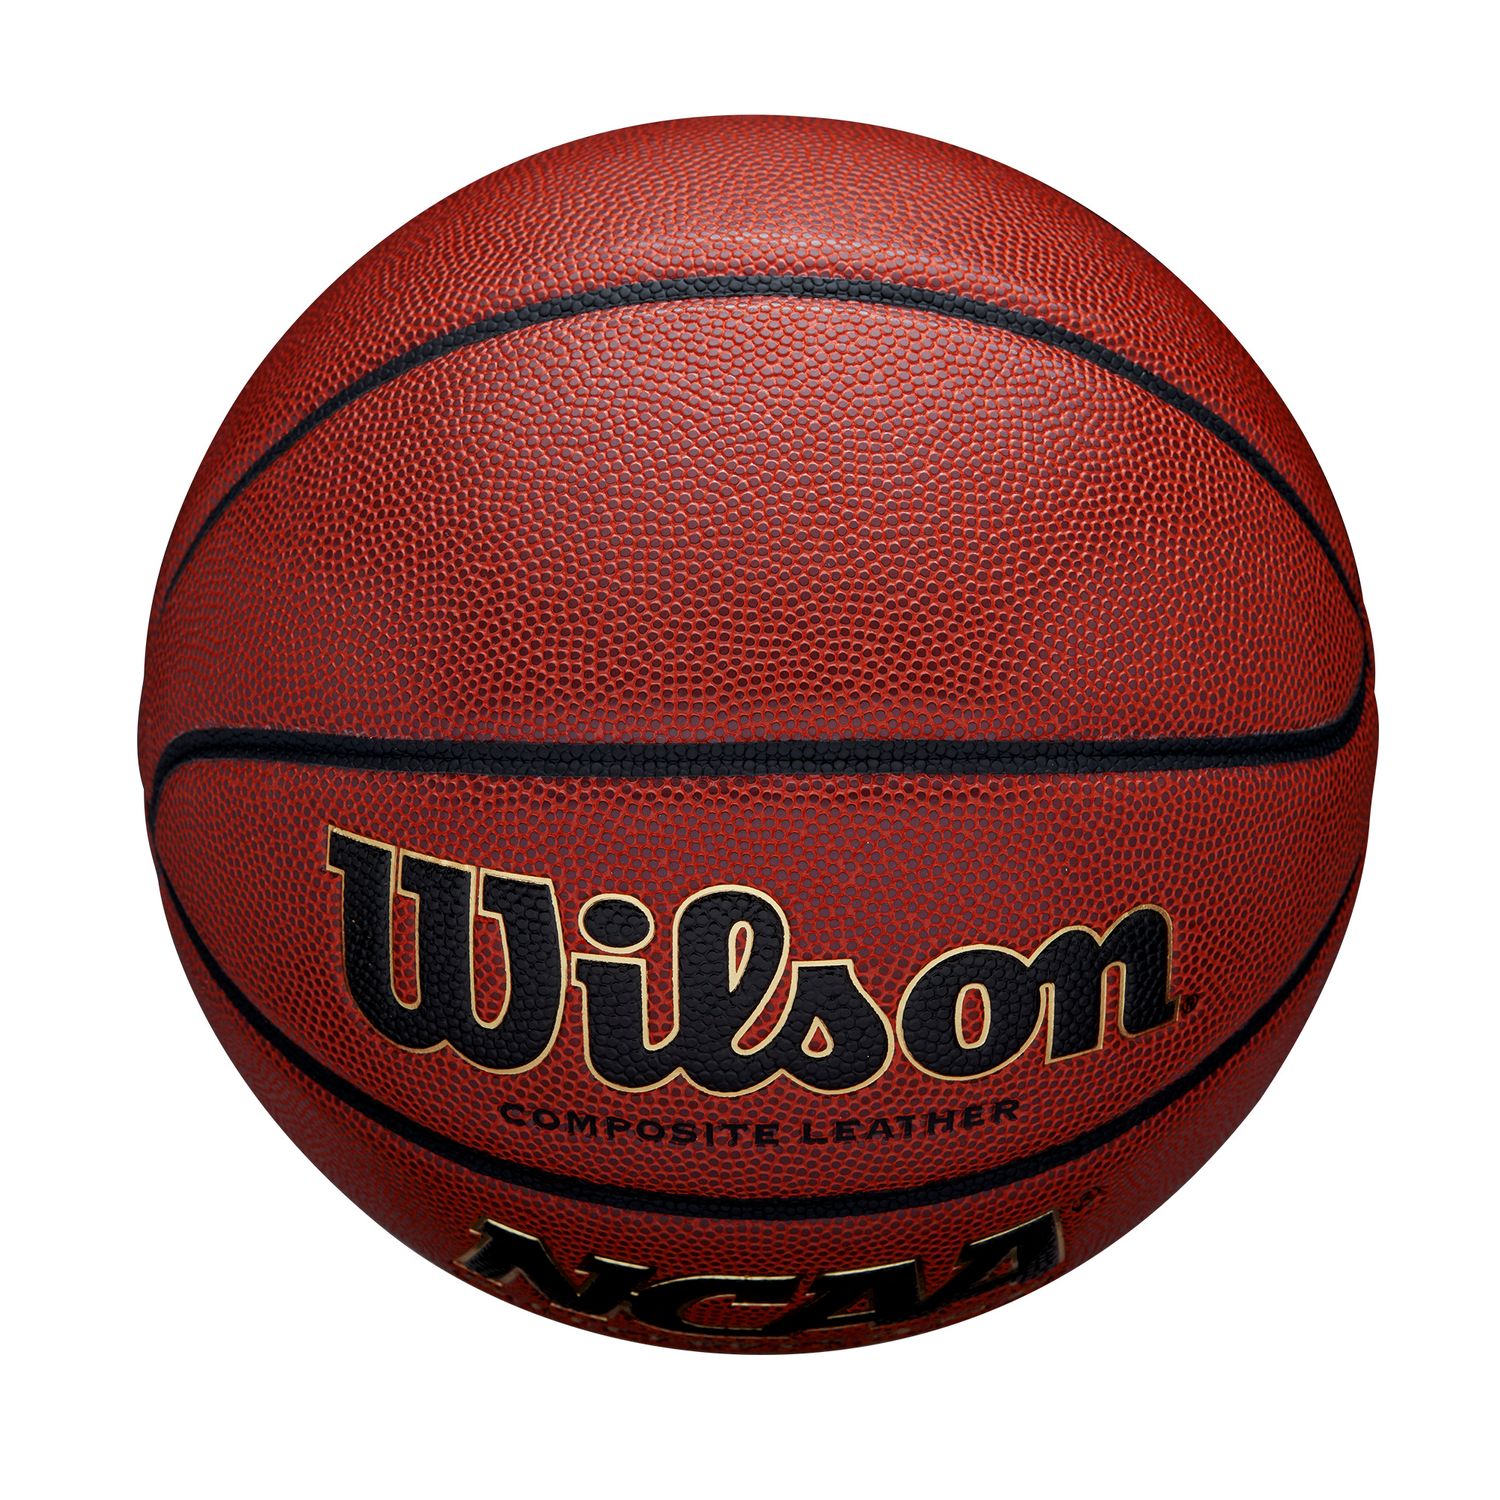 Wilson NCAA Showcase Basketball